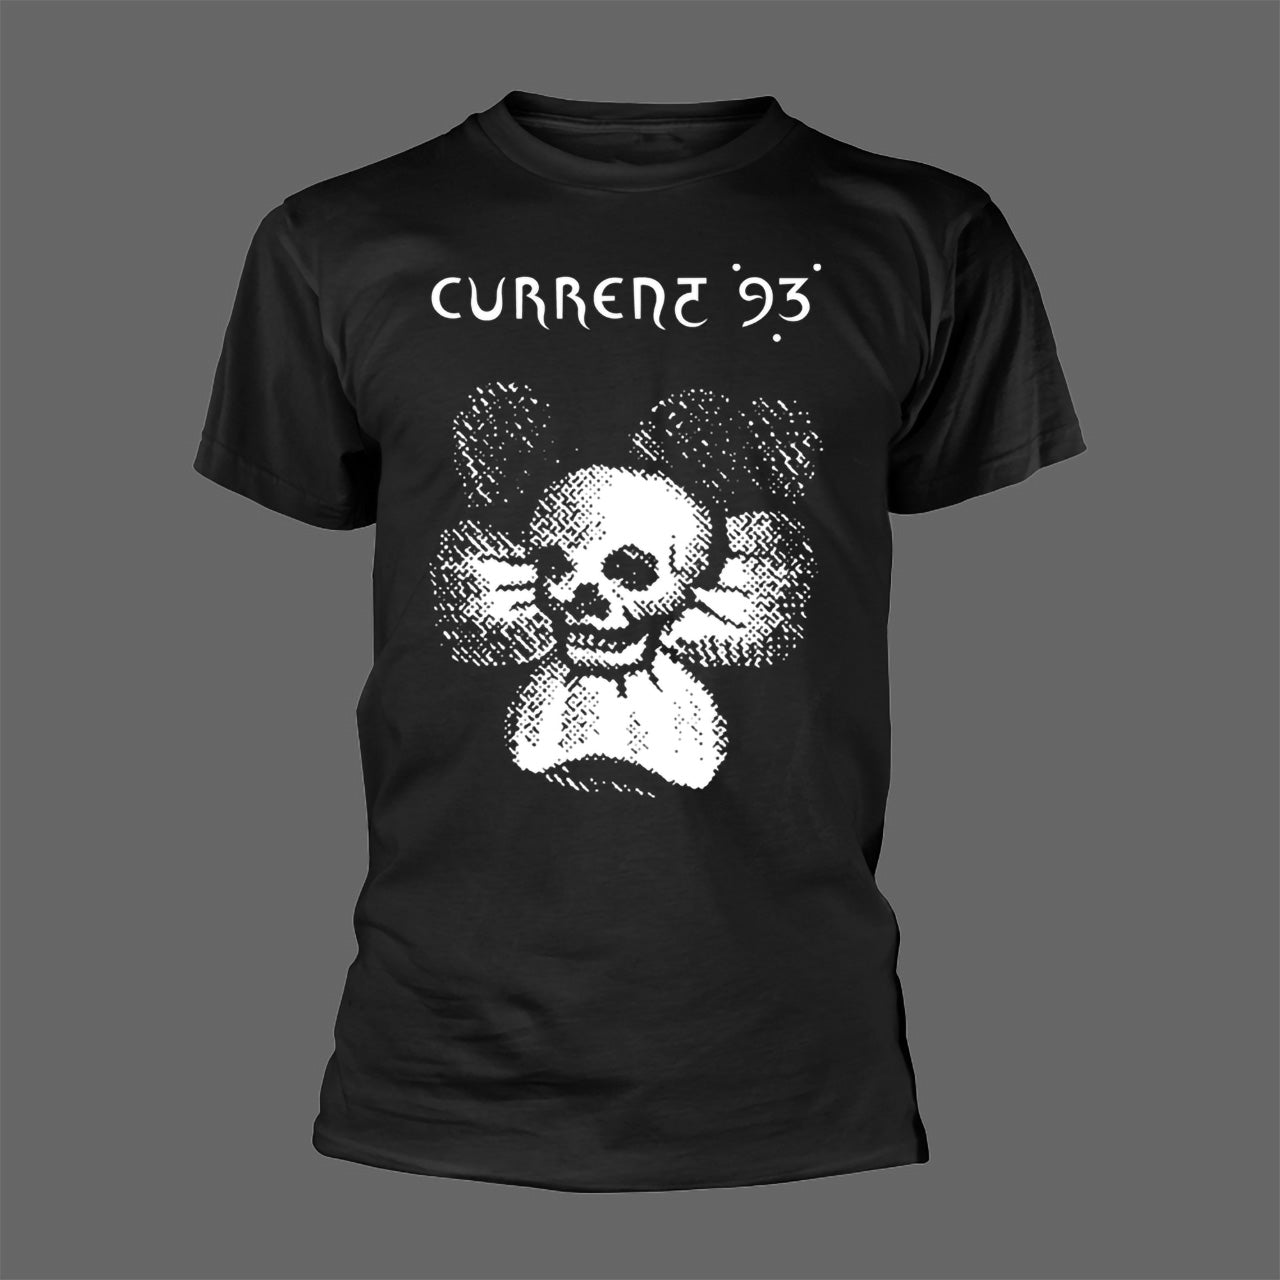 Current 93 - Death Flower (T-Shirt)